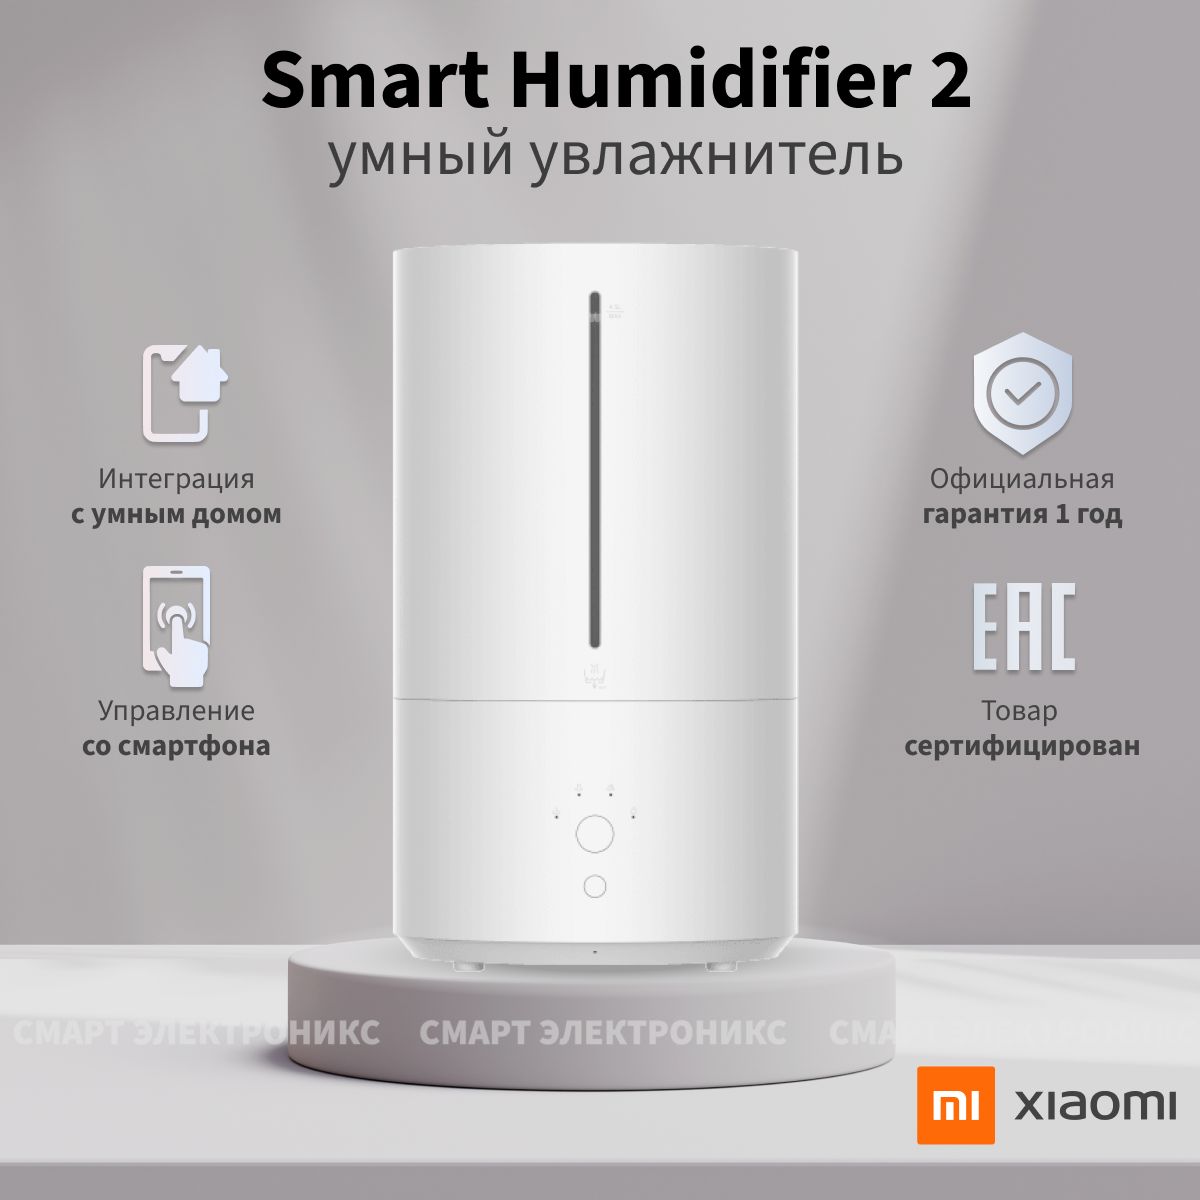 Smart humidifier 2 отзывы